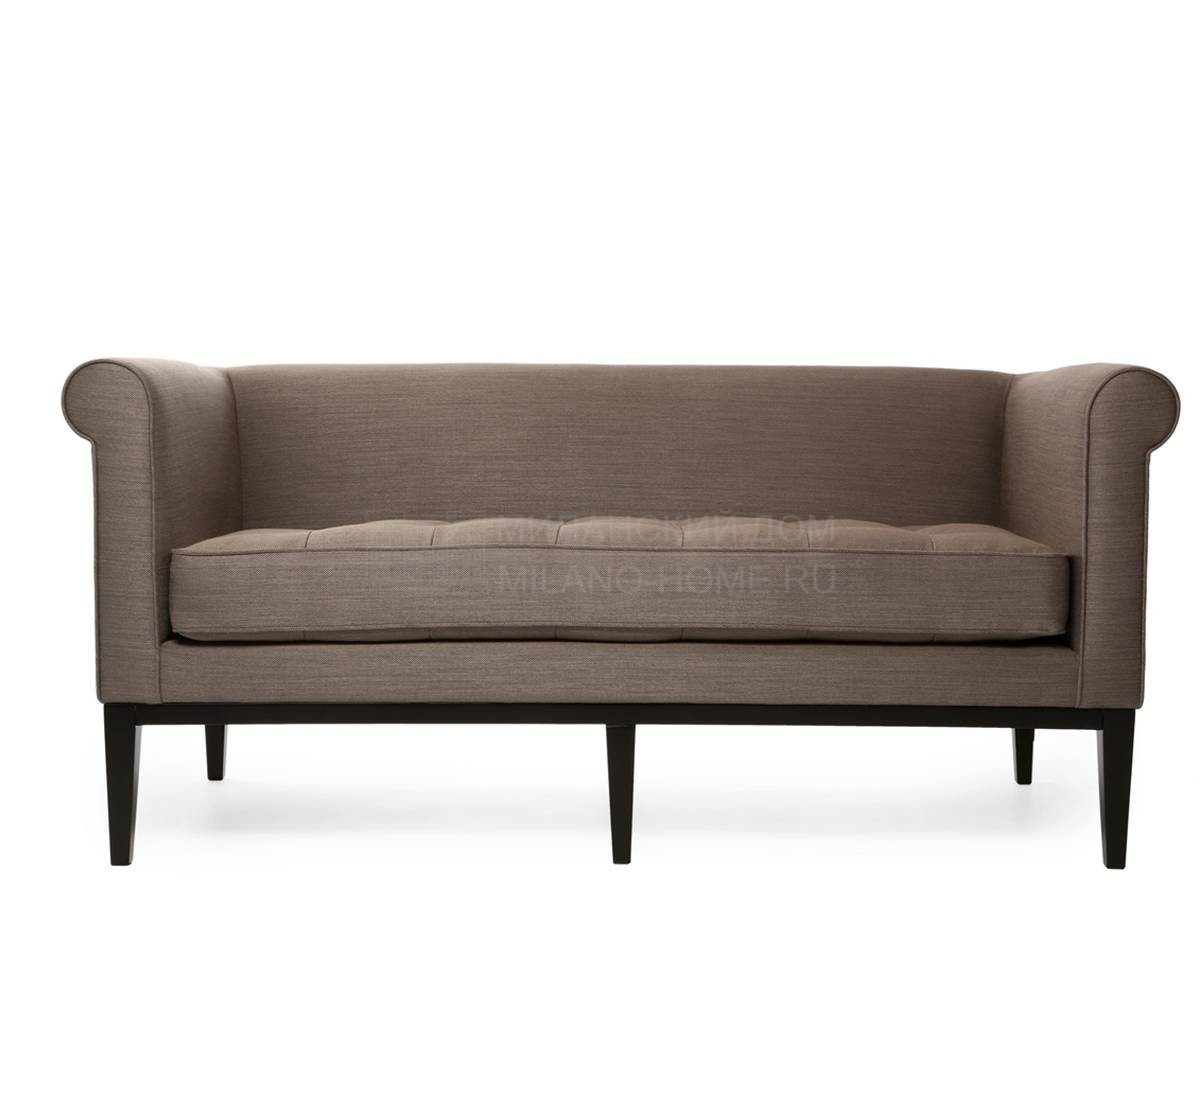 Прямой диван Rubens sofa из Великобритании фабрики THE SOFA & CHAIR Company